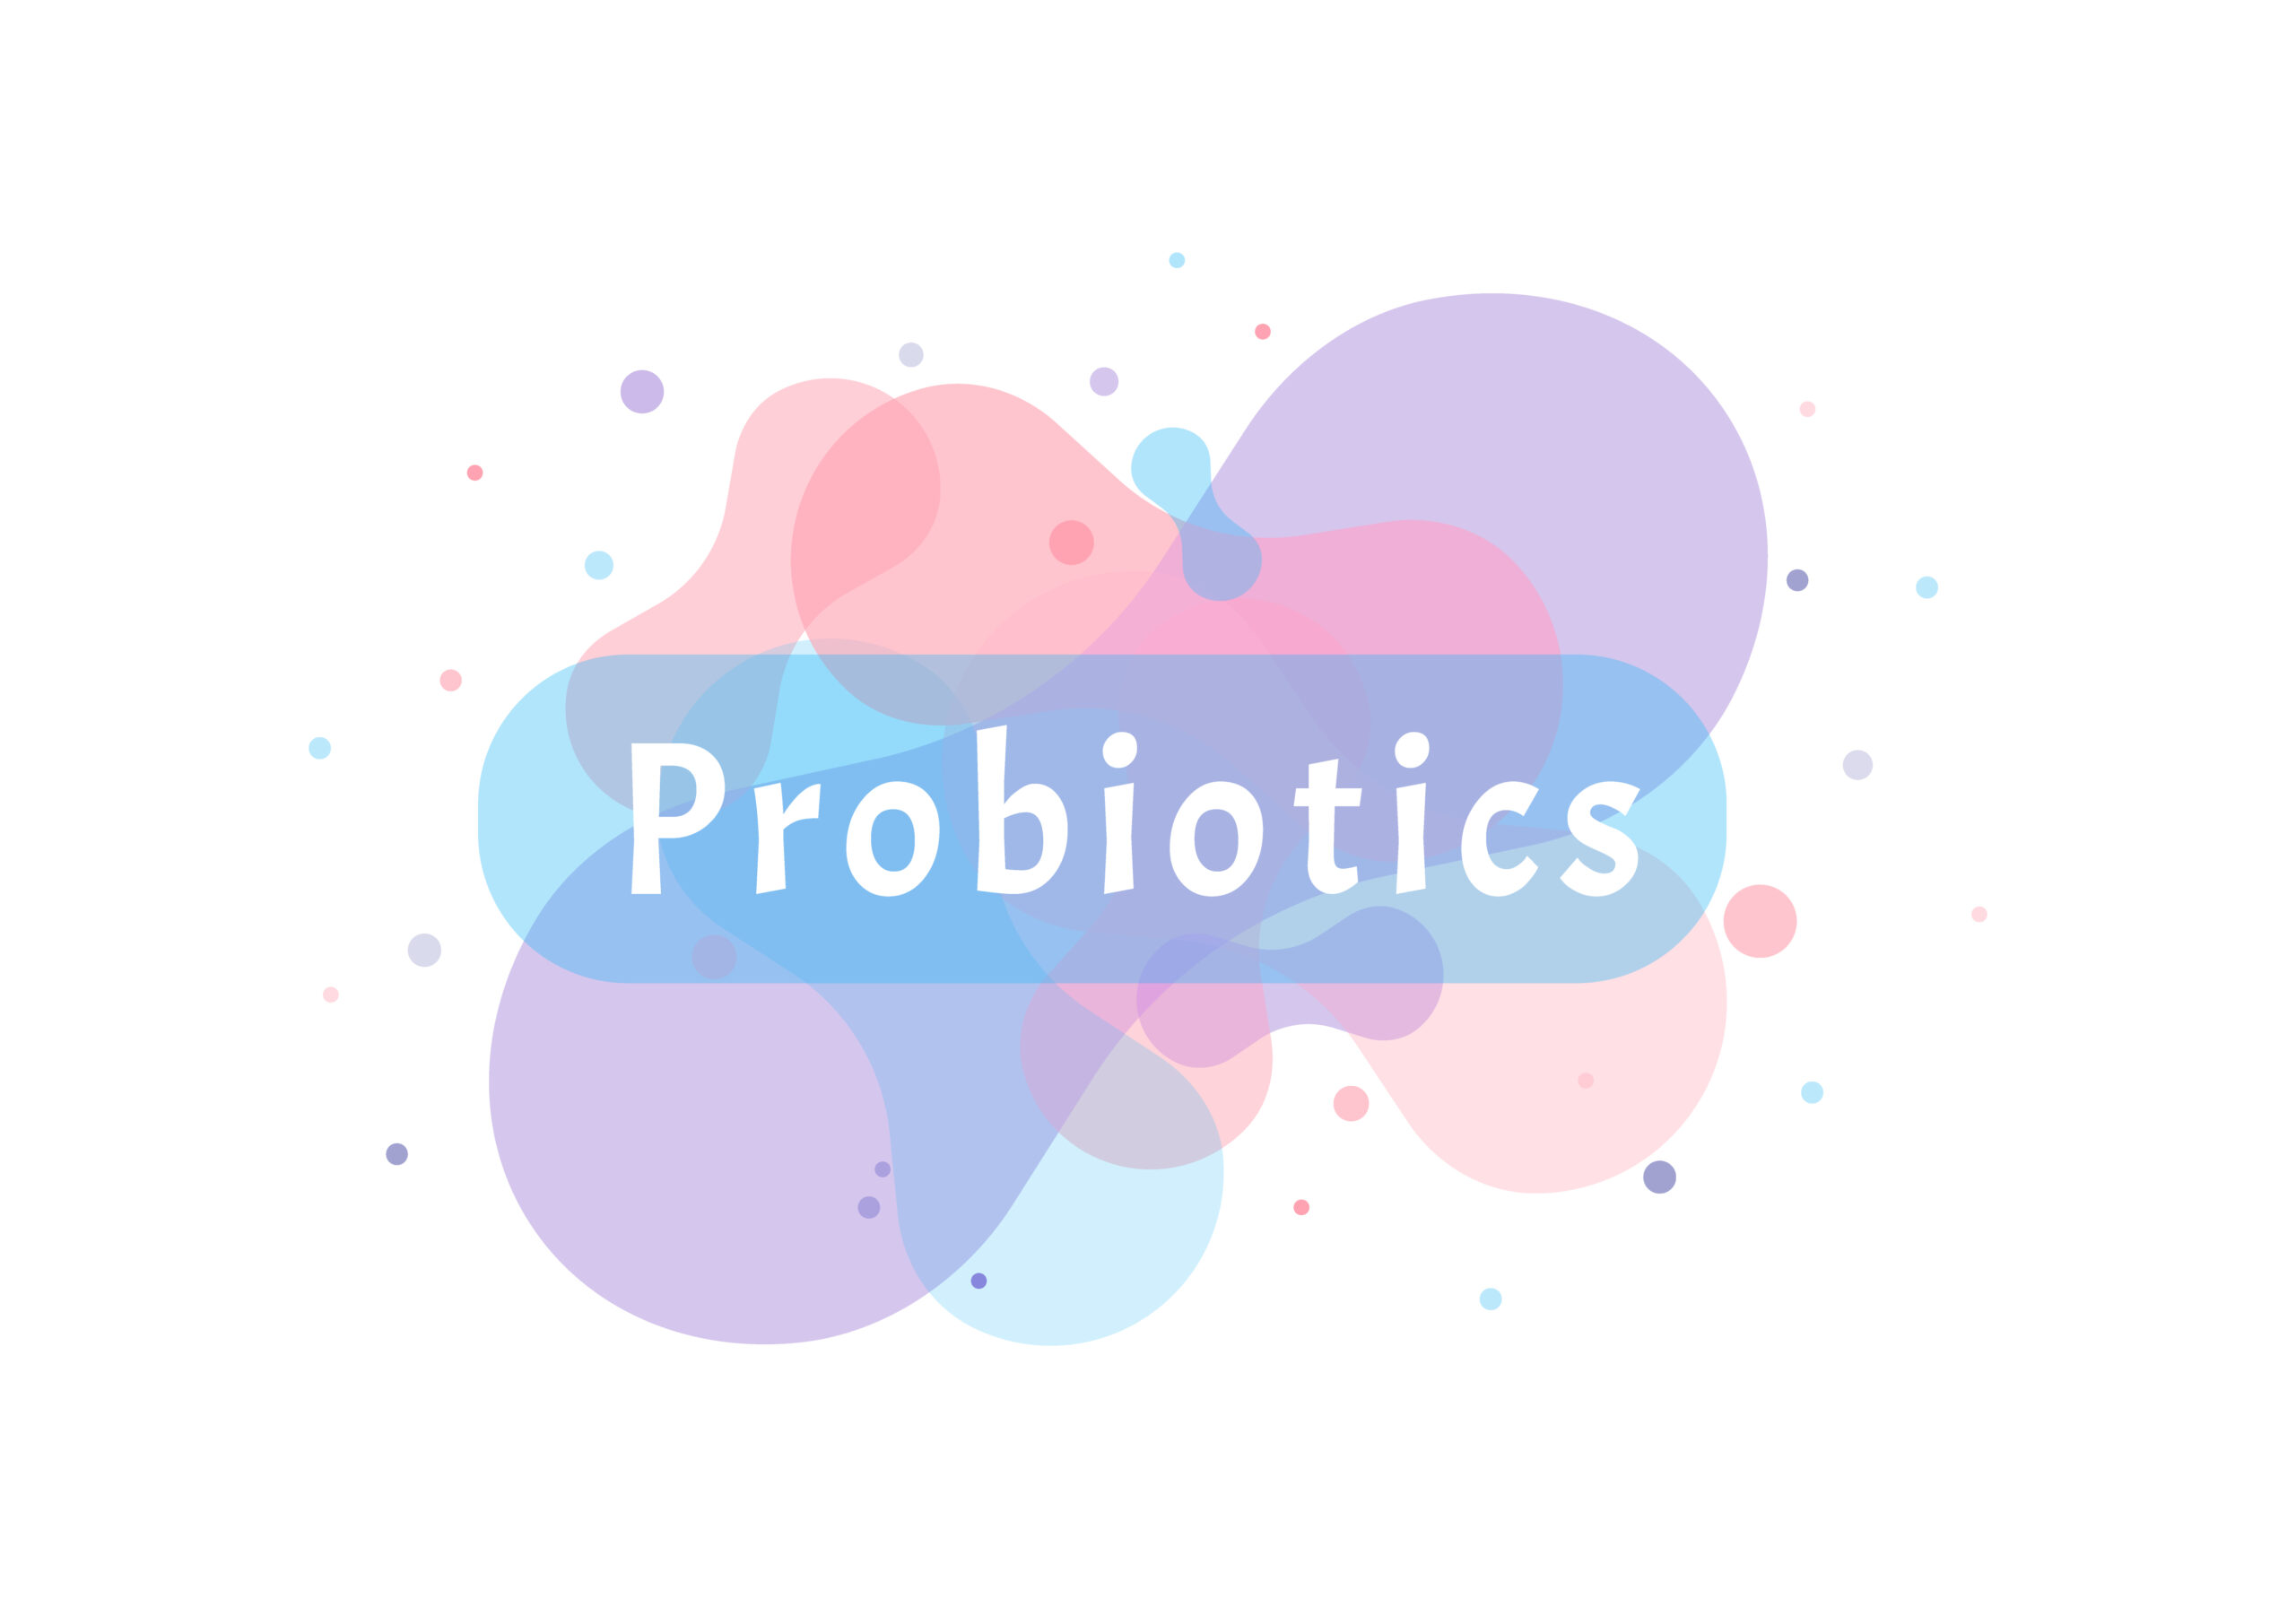 Probiotic or good bacteria